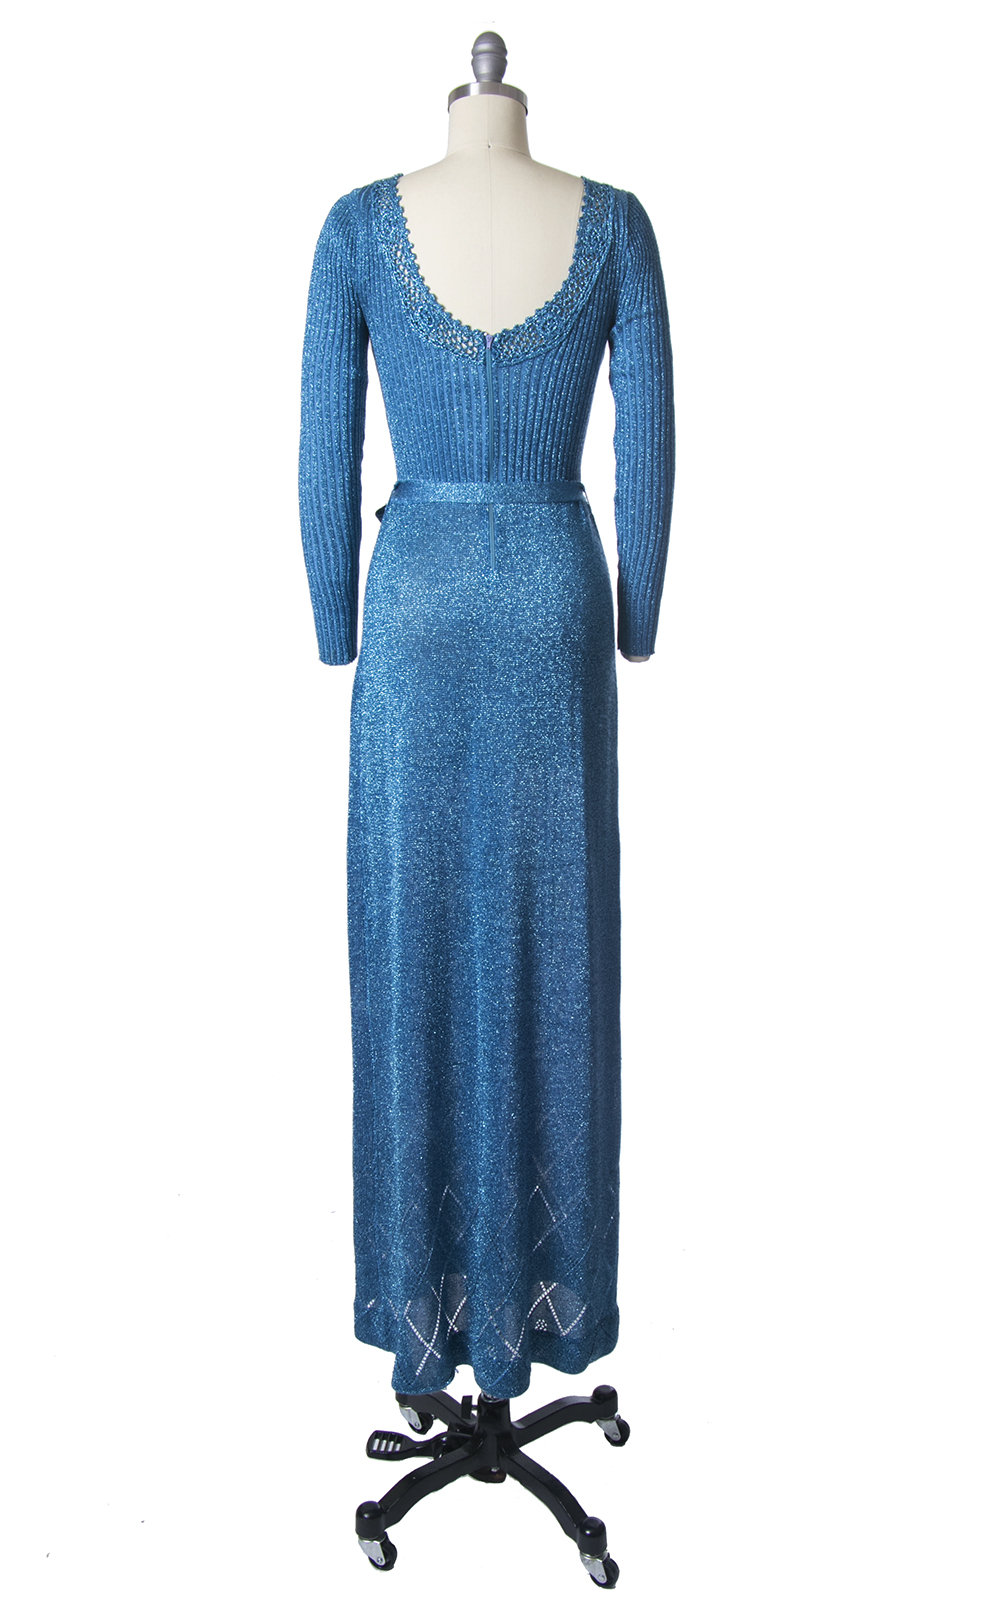 Vintage 1970s Dress | 70s WENJILLI Metallic Blue Knit Sparkly Lurex Party Full Length Maxi Dress (x-small/small/medium)